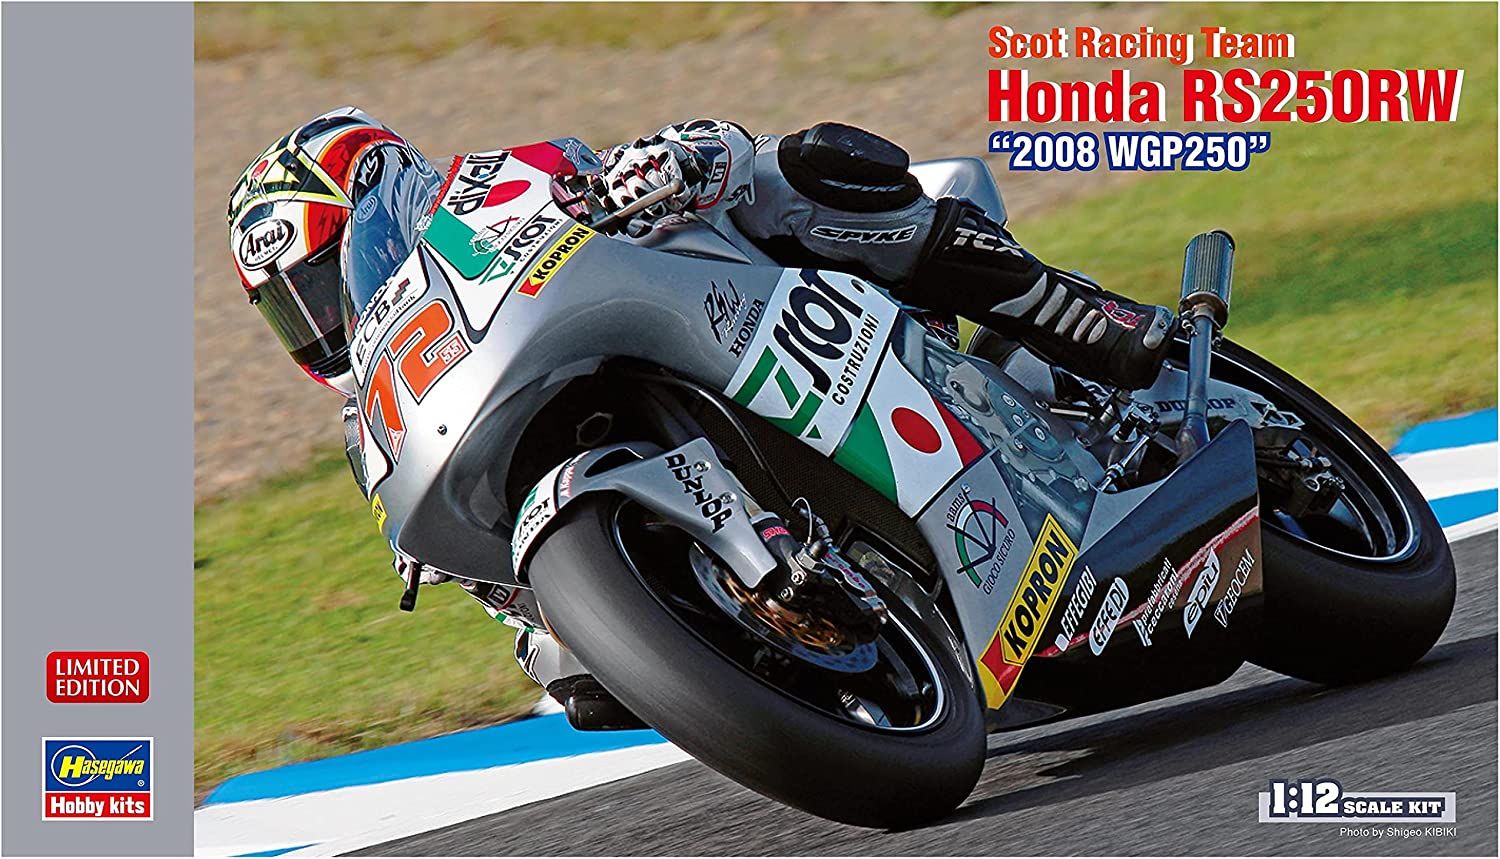 Hasegawa Scot Racing Team Honda RS250RW `2008 WGP250` - BanzaiHobby